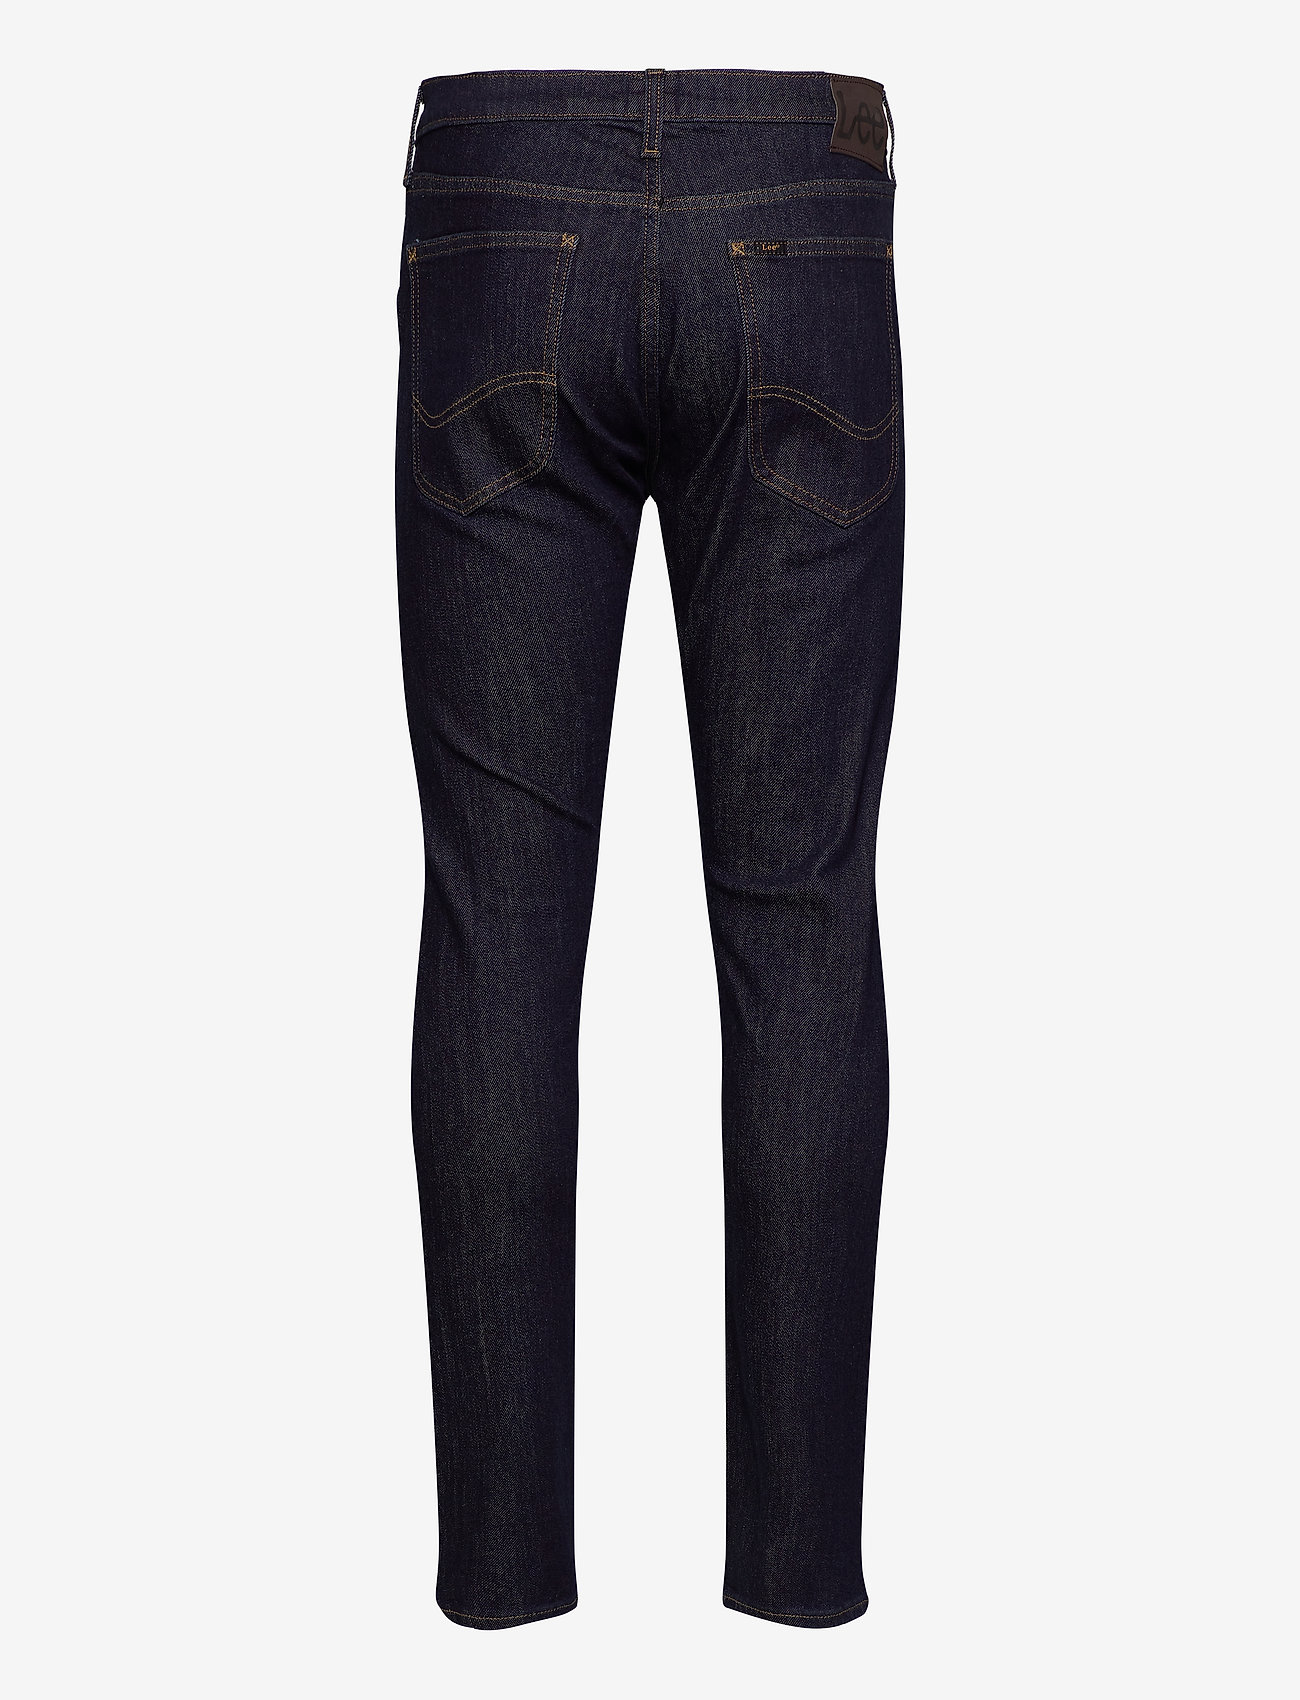 Lee Jeans - Luke - slim fit jeans - rinse - 1